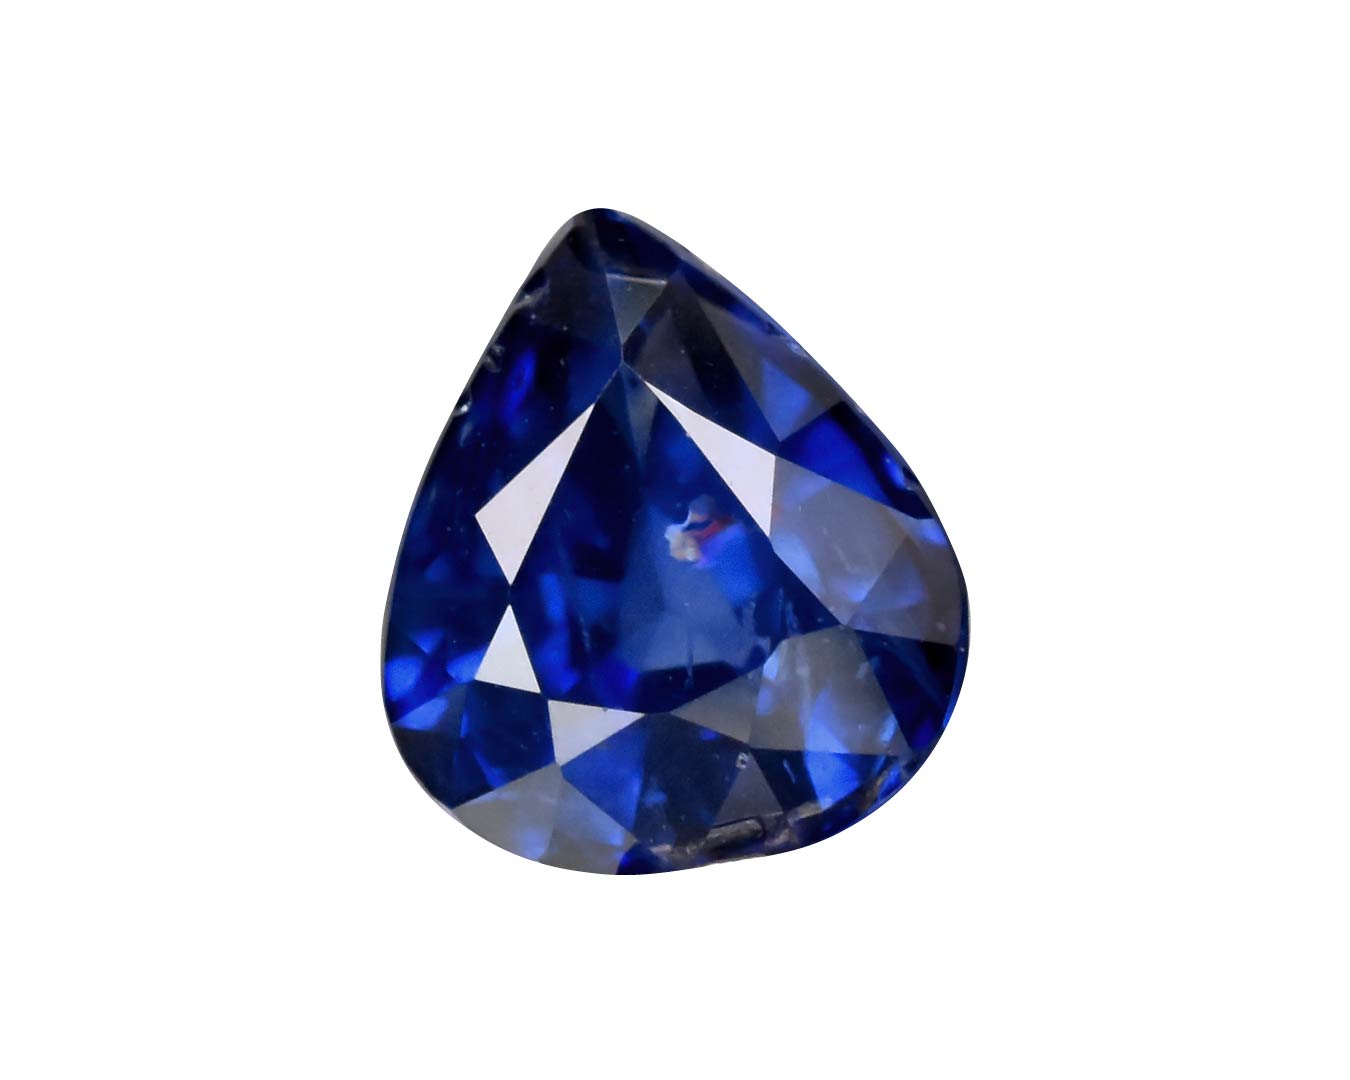 Piedra Zafiro Royal Blue 0.58cts S-1802